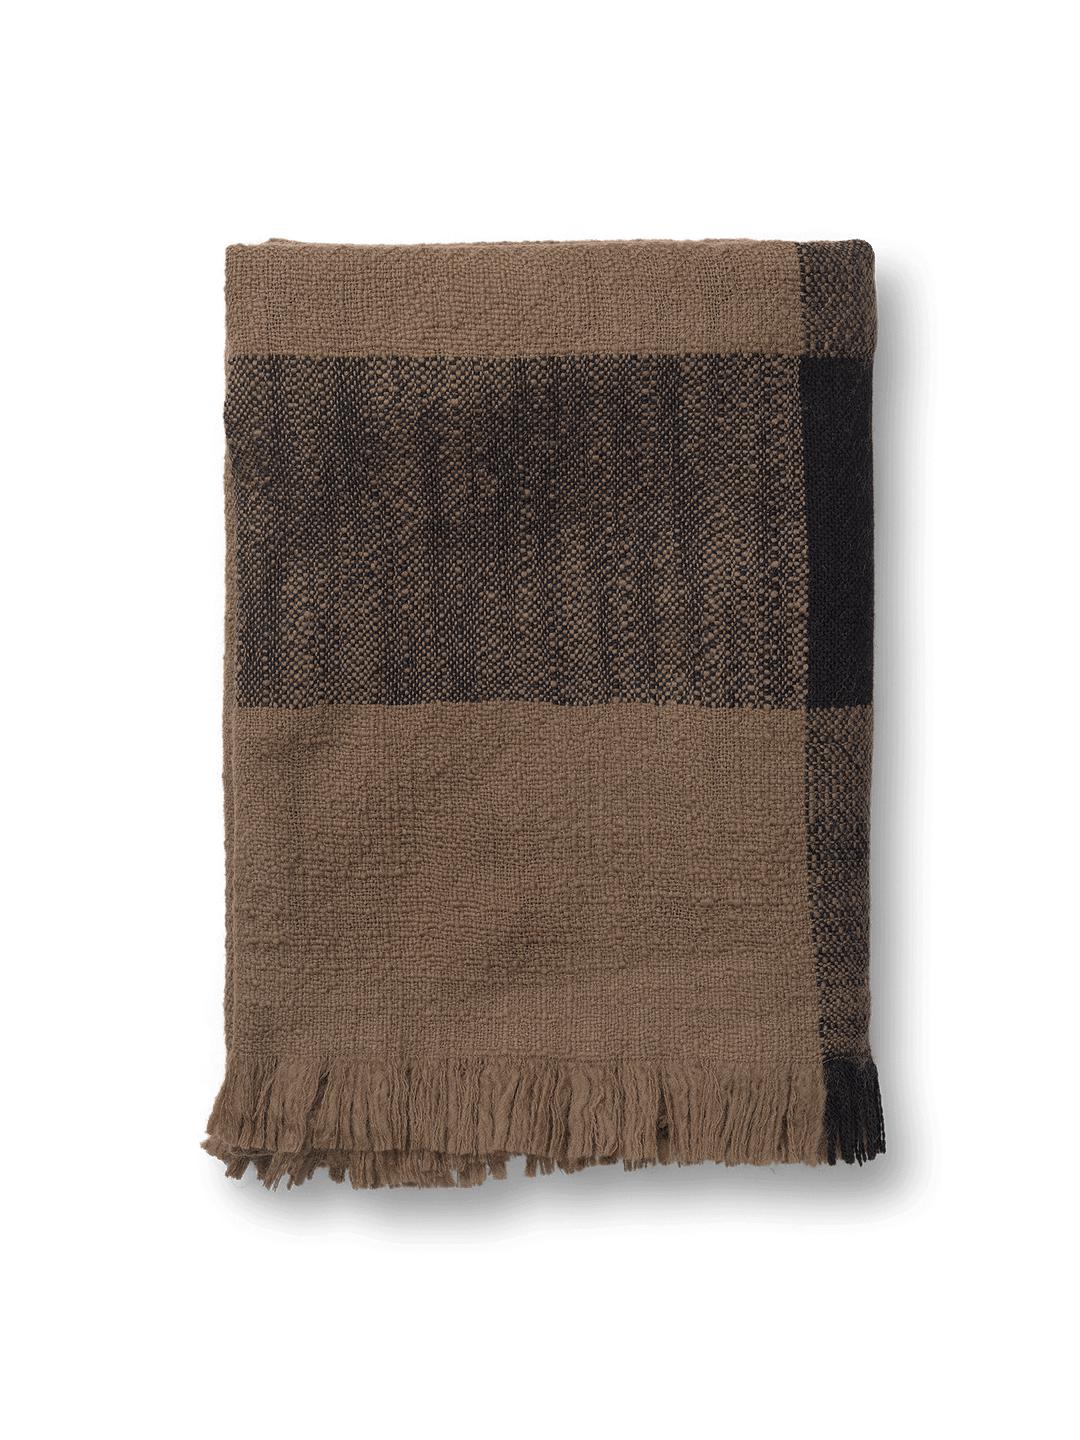 Ferm Living Dry Blanket, Sugar Kelp/Schwarz